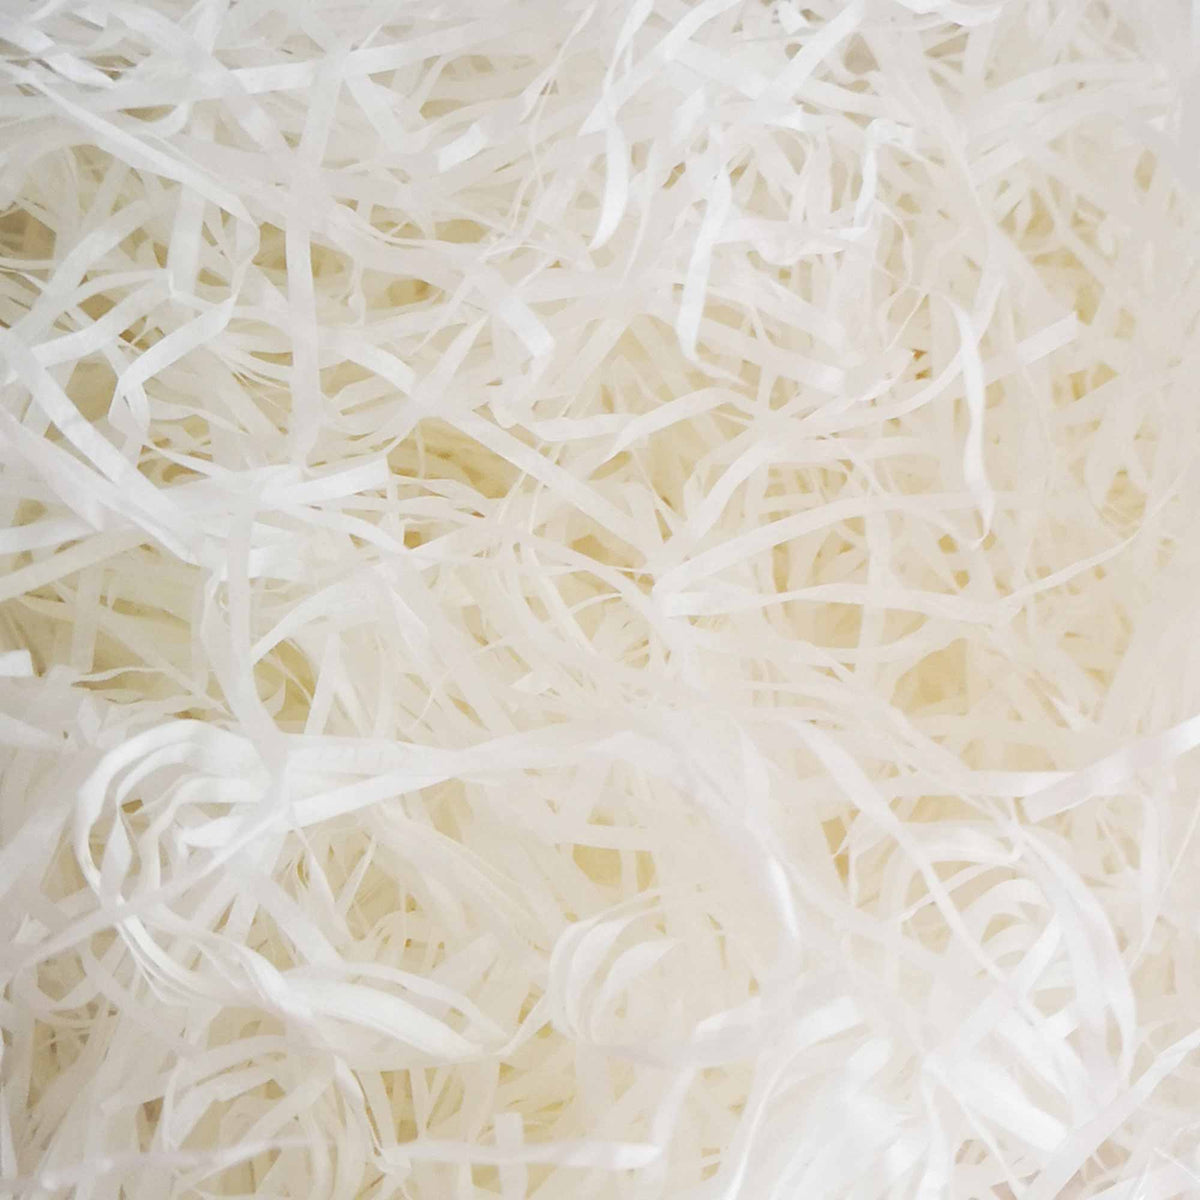 Shredded Tissue Paper for Packaging and Decor - Cream